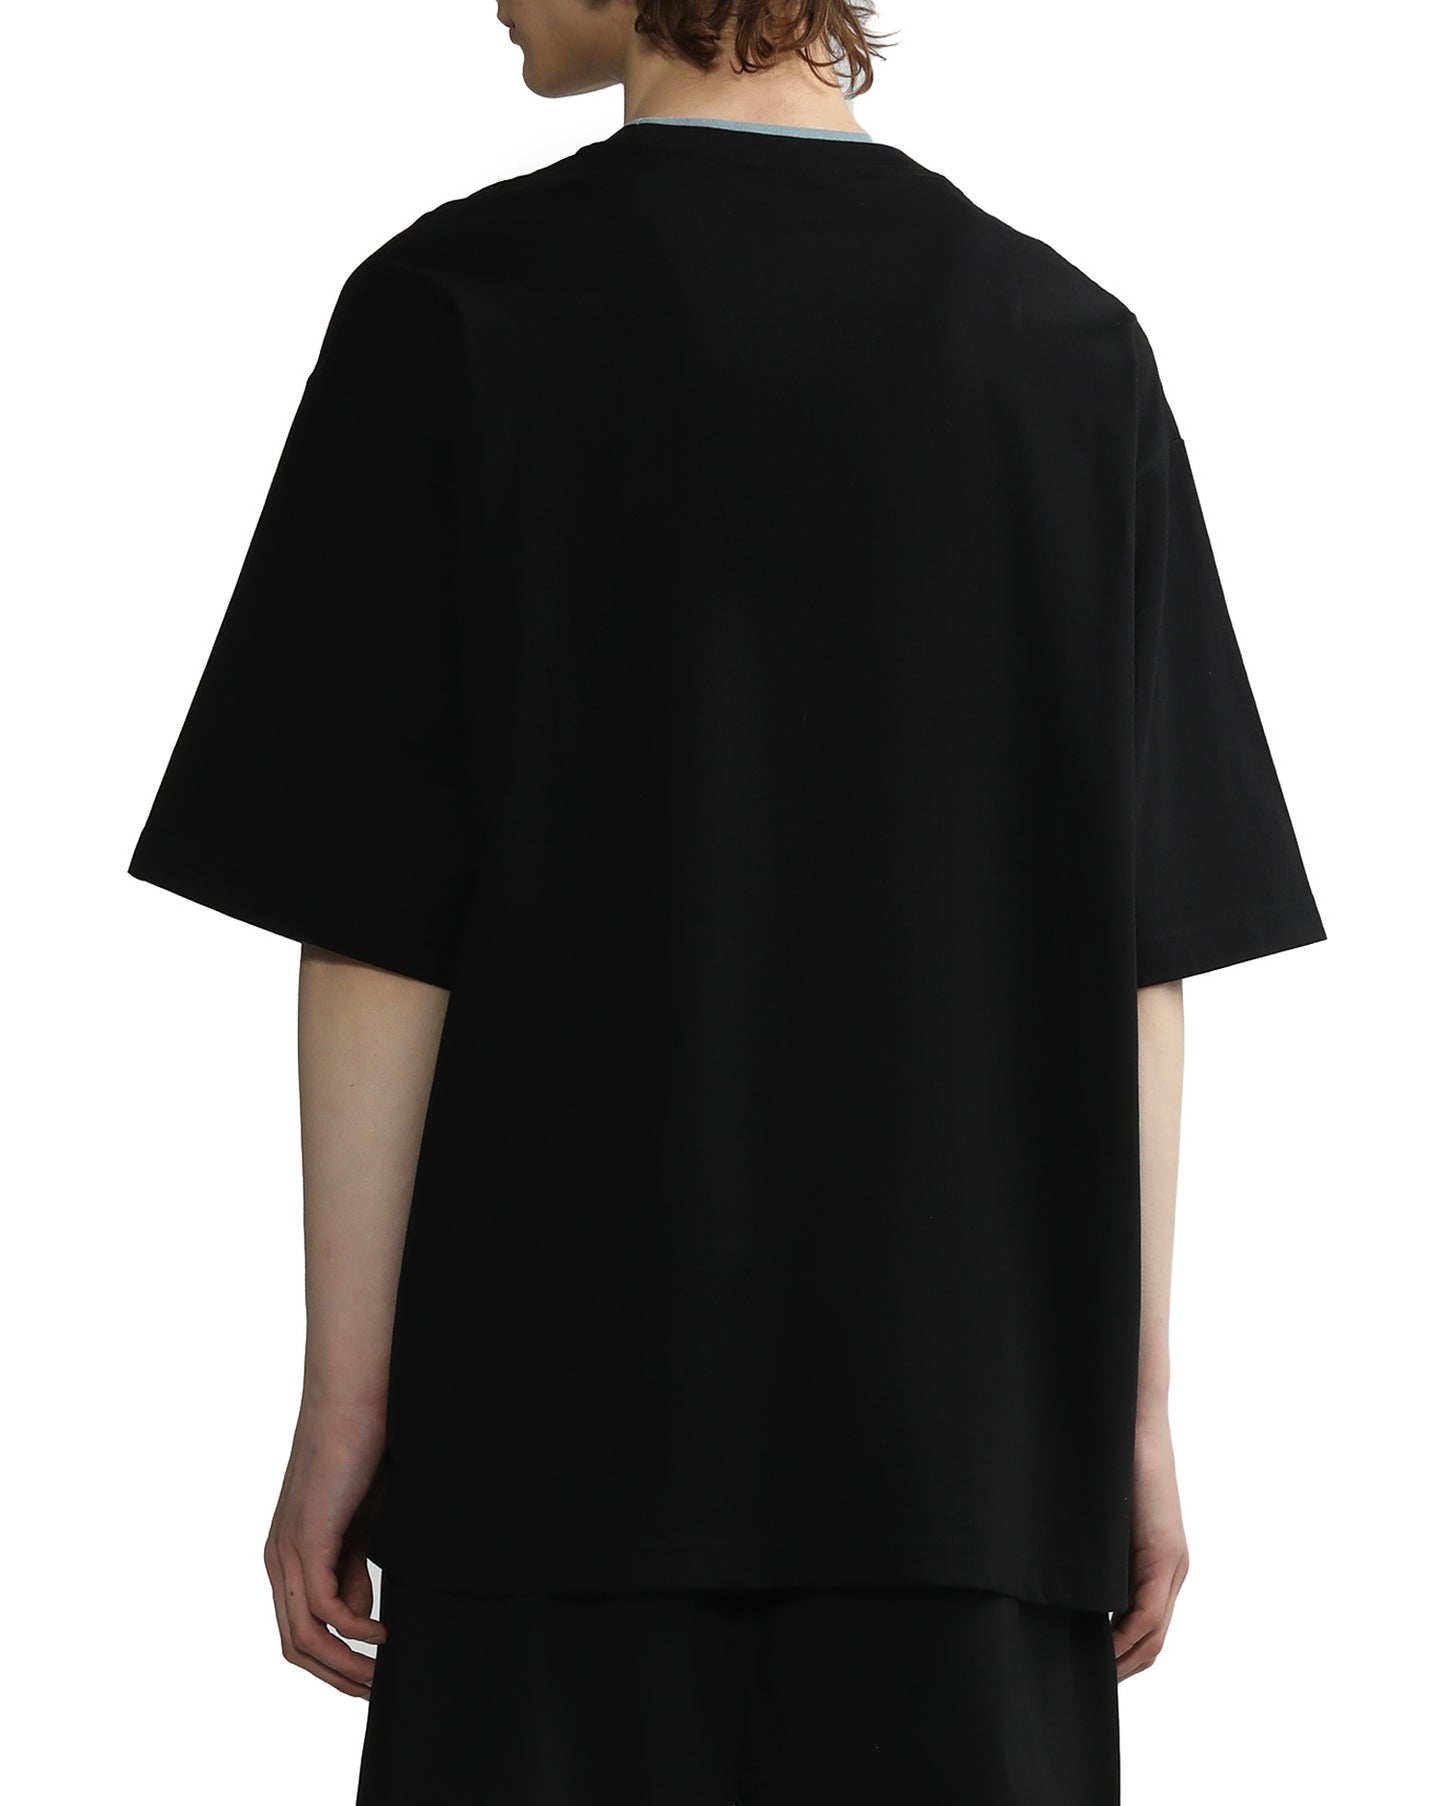 Men's - Pocket T-shirt in Black